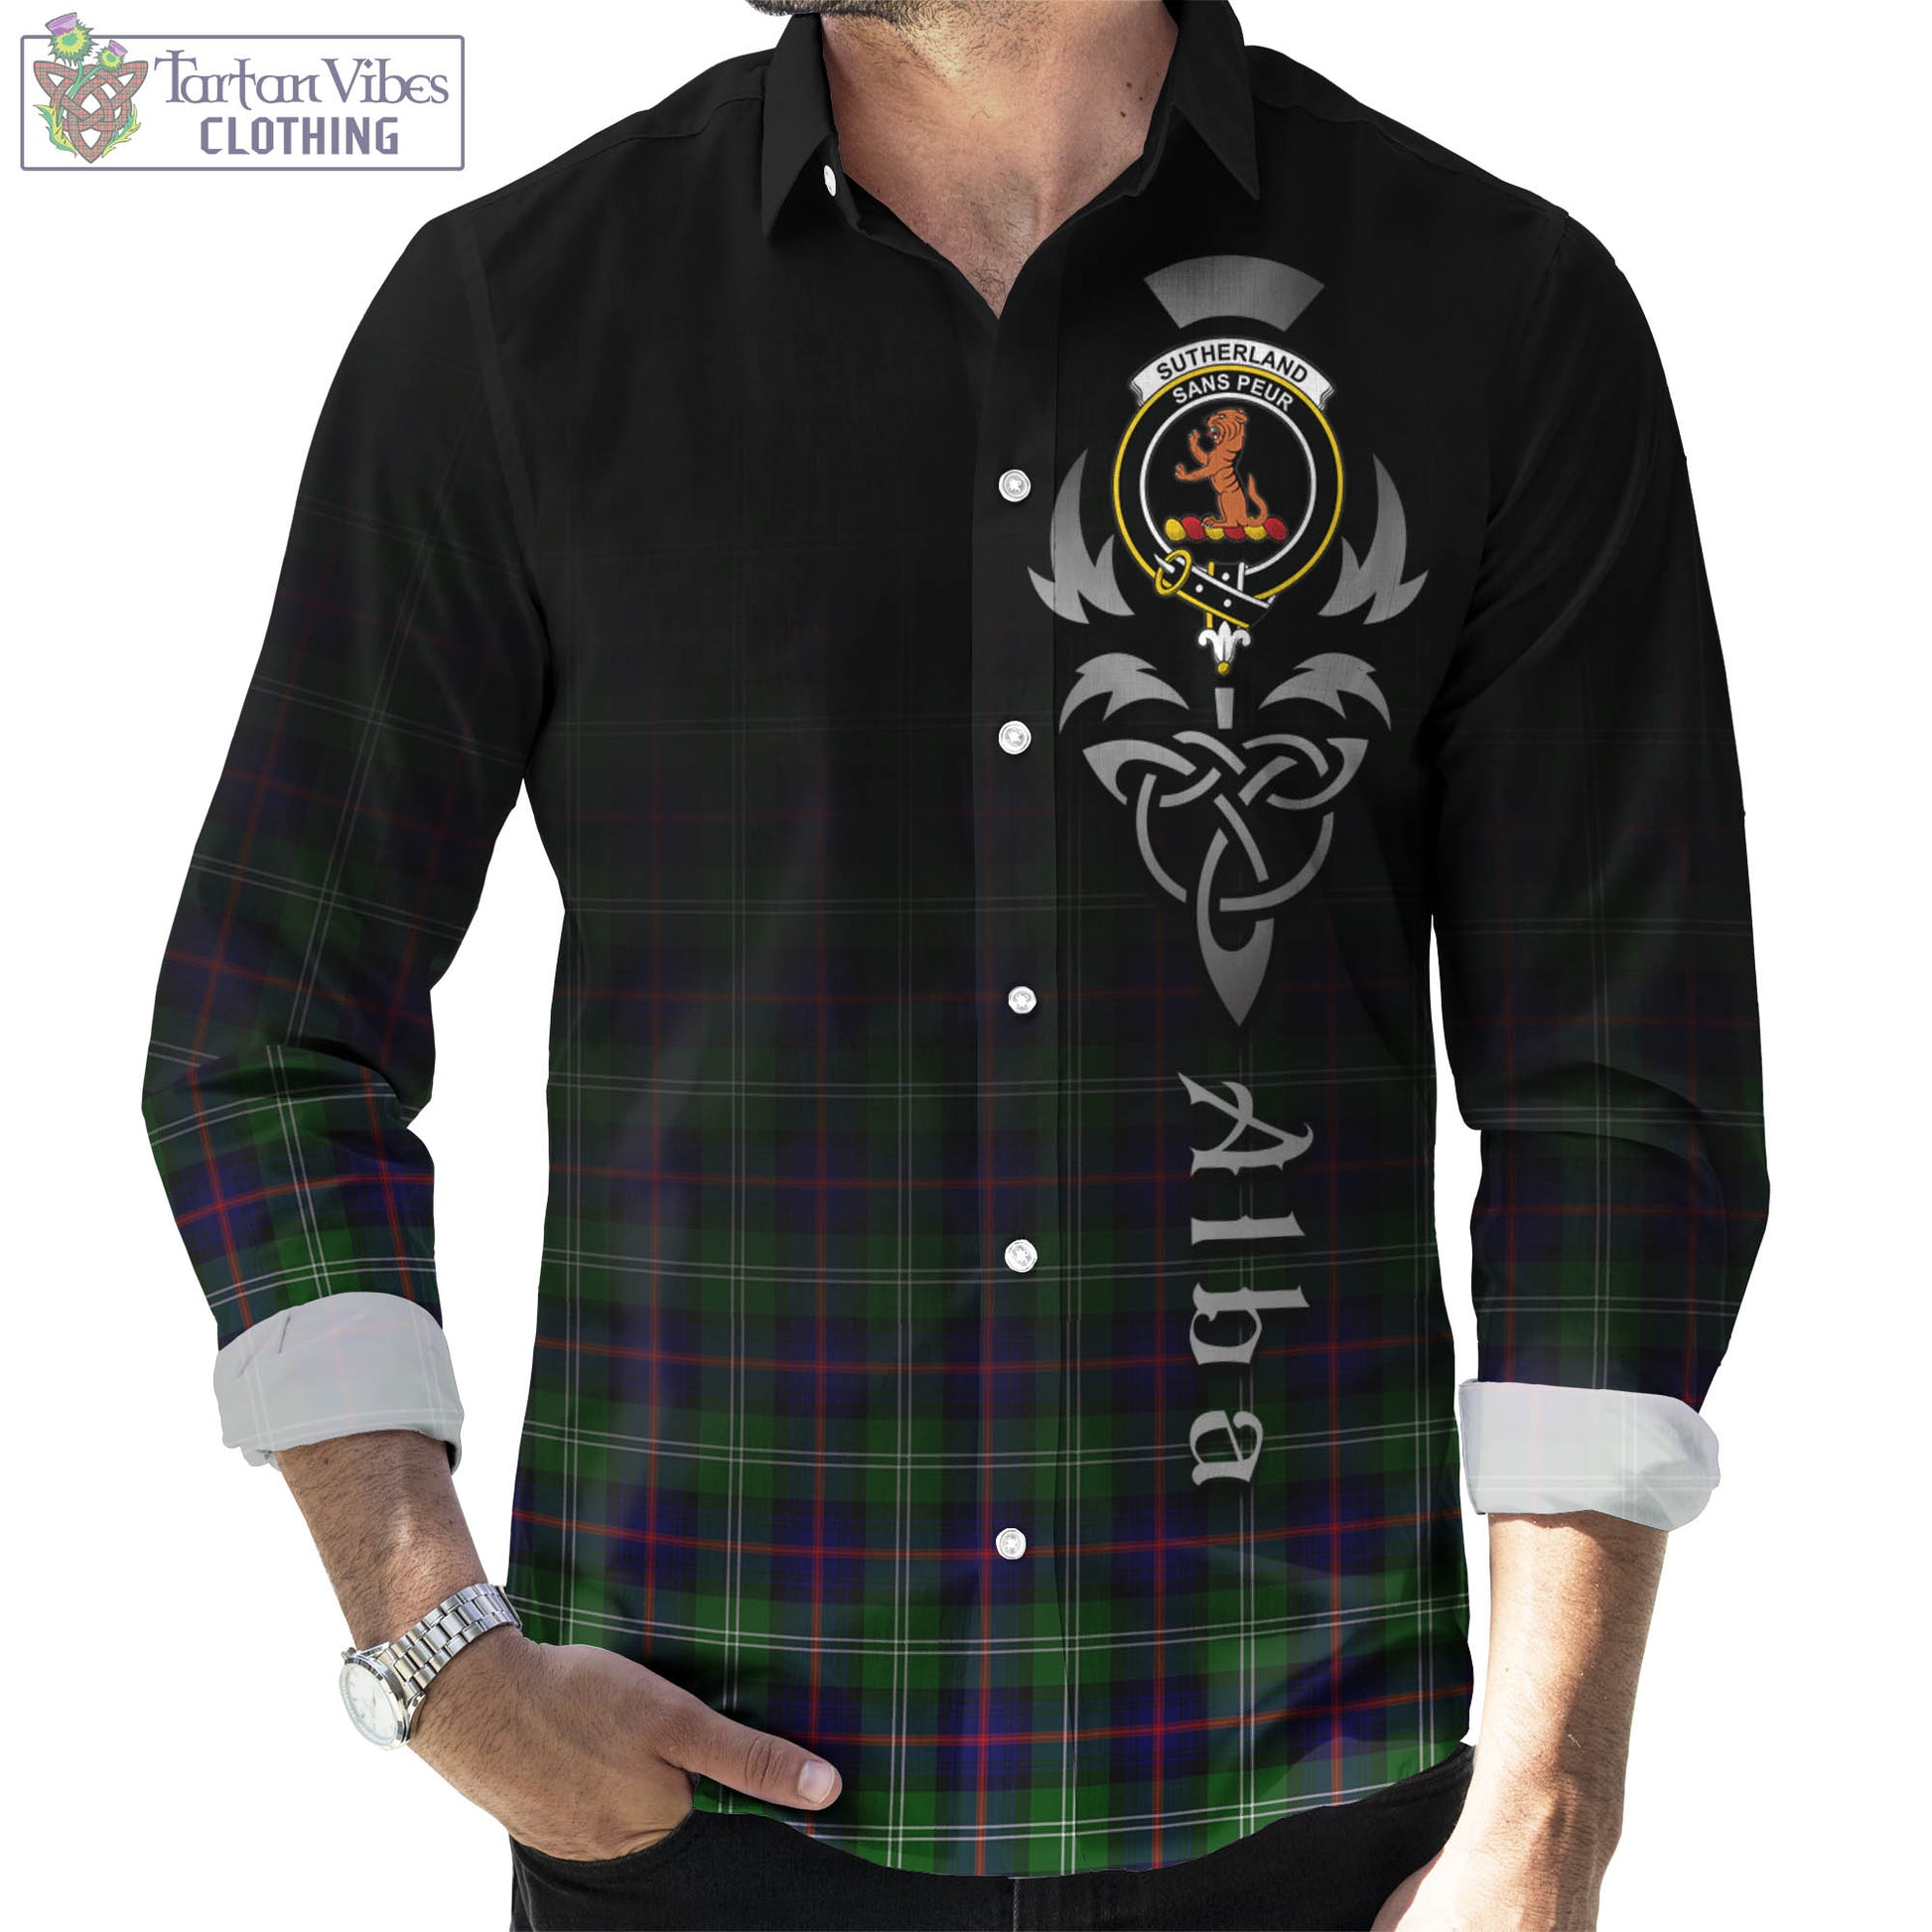 Tartan Vibes Clothing Sutherland Modern Tartan Long Sleeve Button Up Featuring Alba Gu Brath Family Crest Celtic Inspired